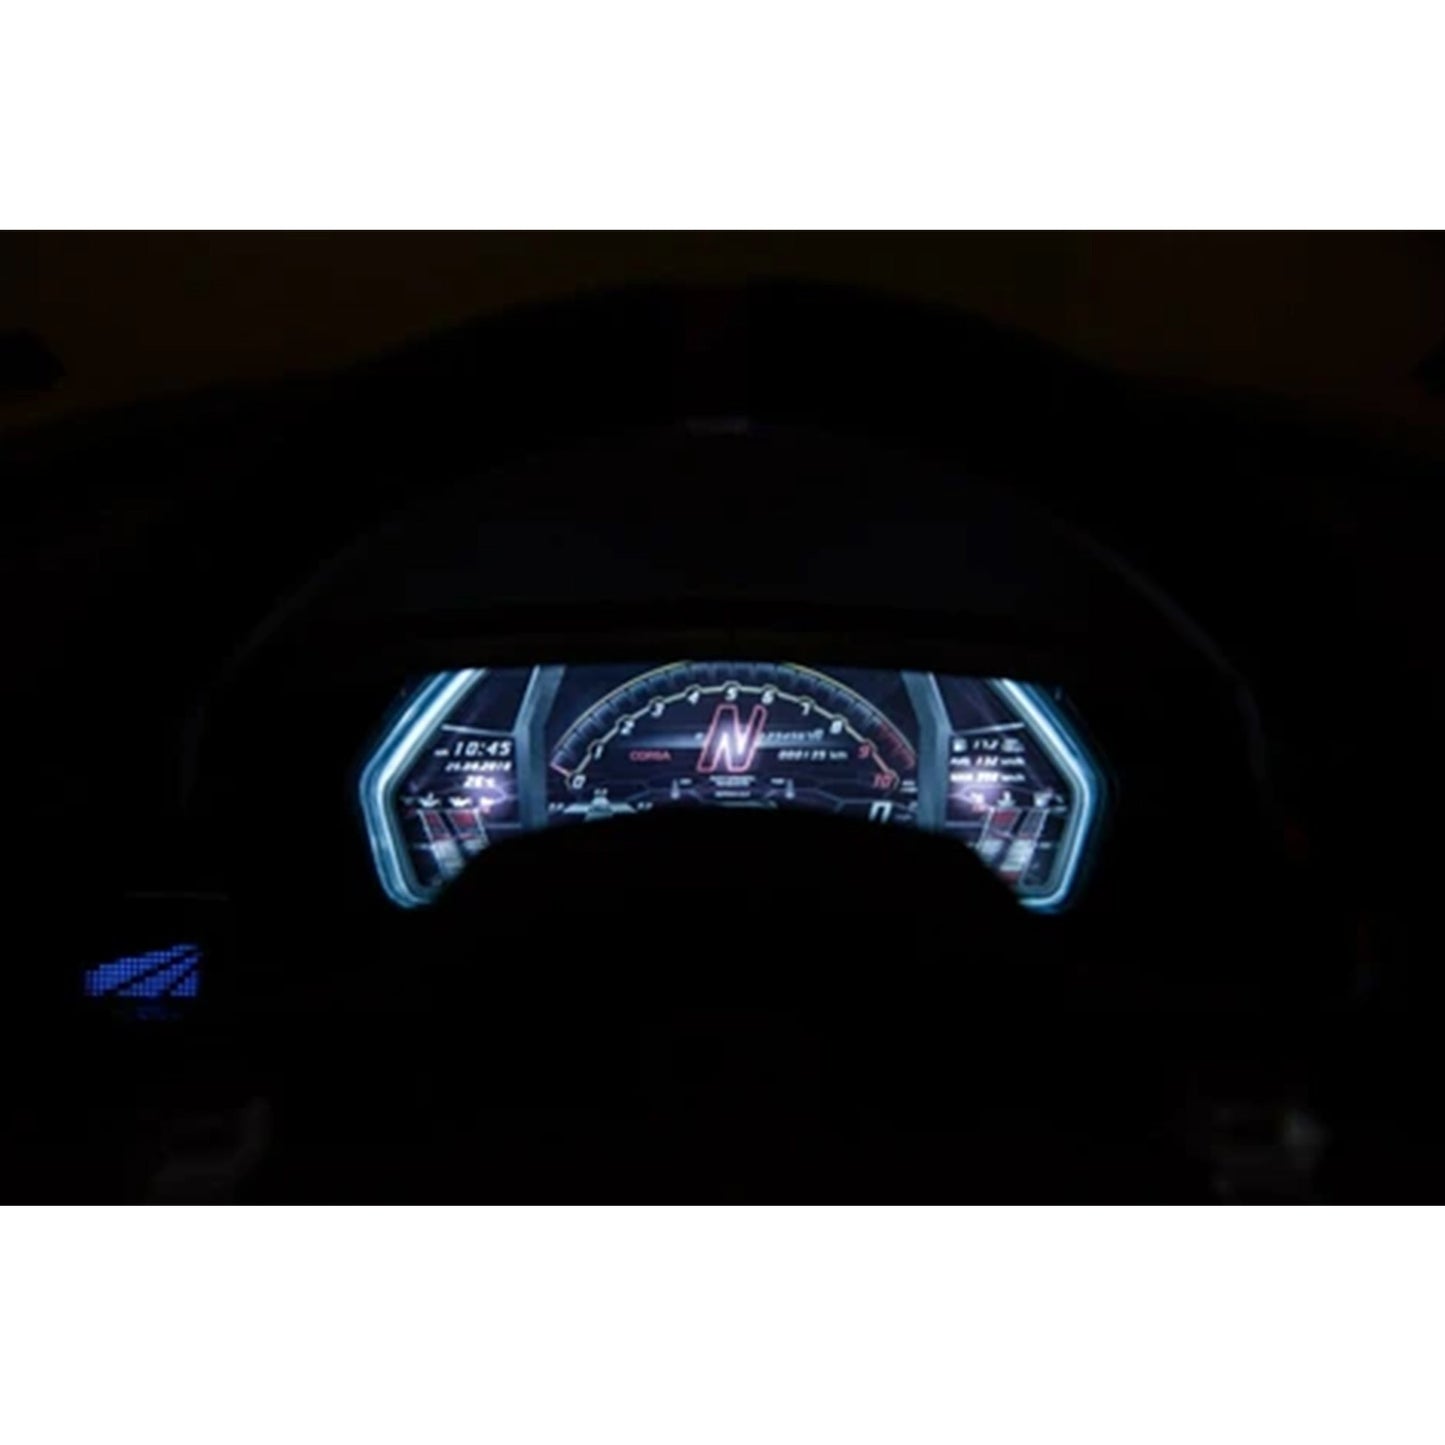 "Dashboard of a Matt Black Lamborghini SVJ Ride On with 2.4G Parent Remote 12V at Kids Car store, illuminated at night."